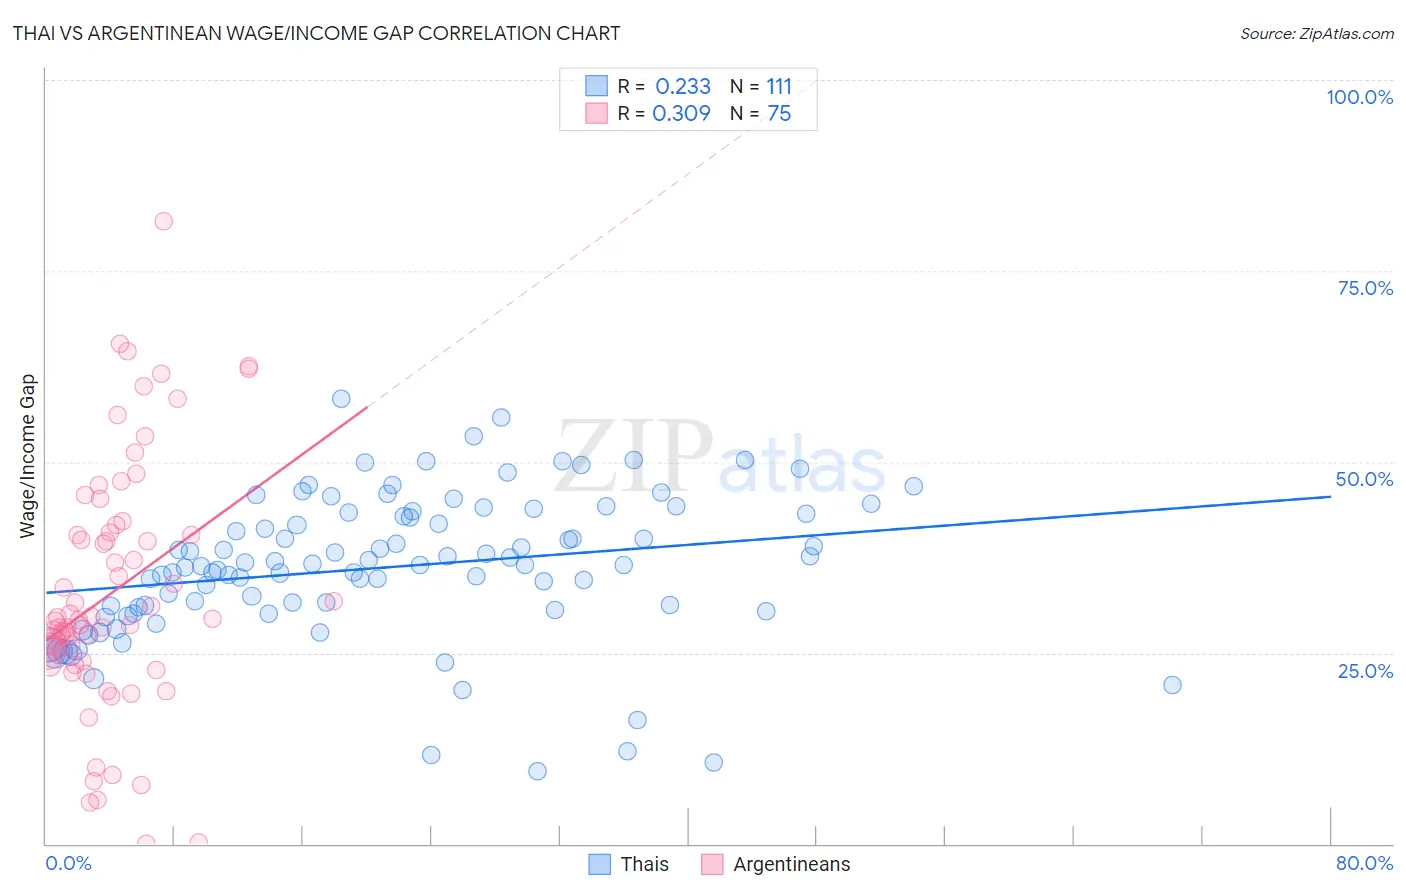 Thai vs Argentinean Wage/Income Gap